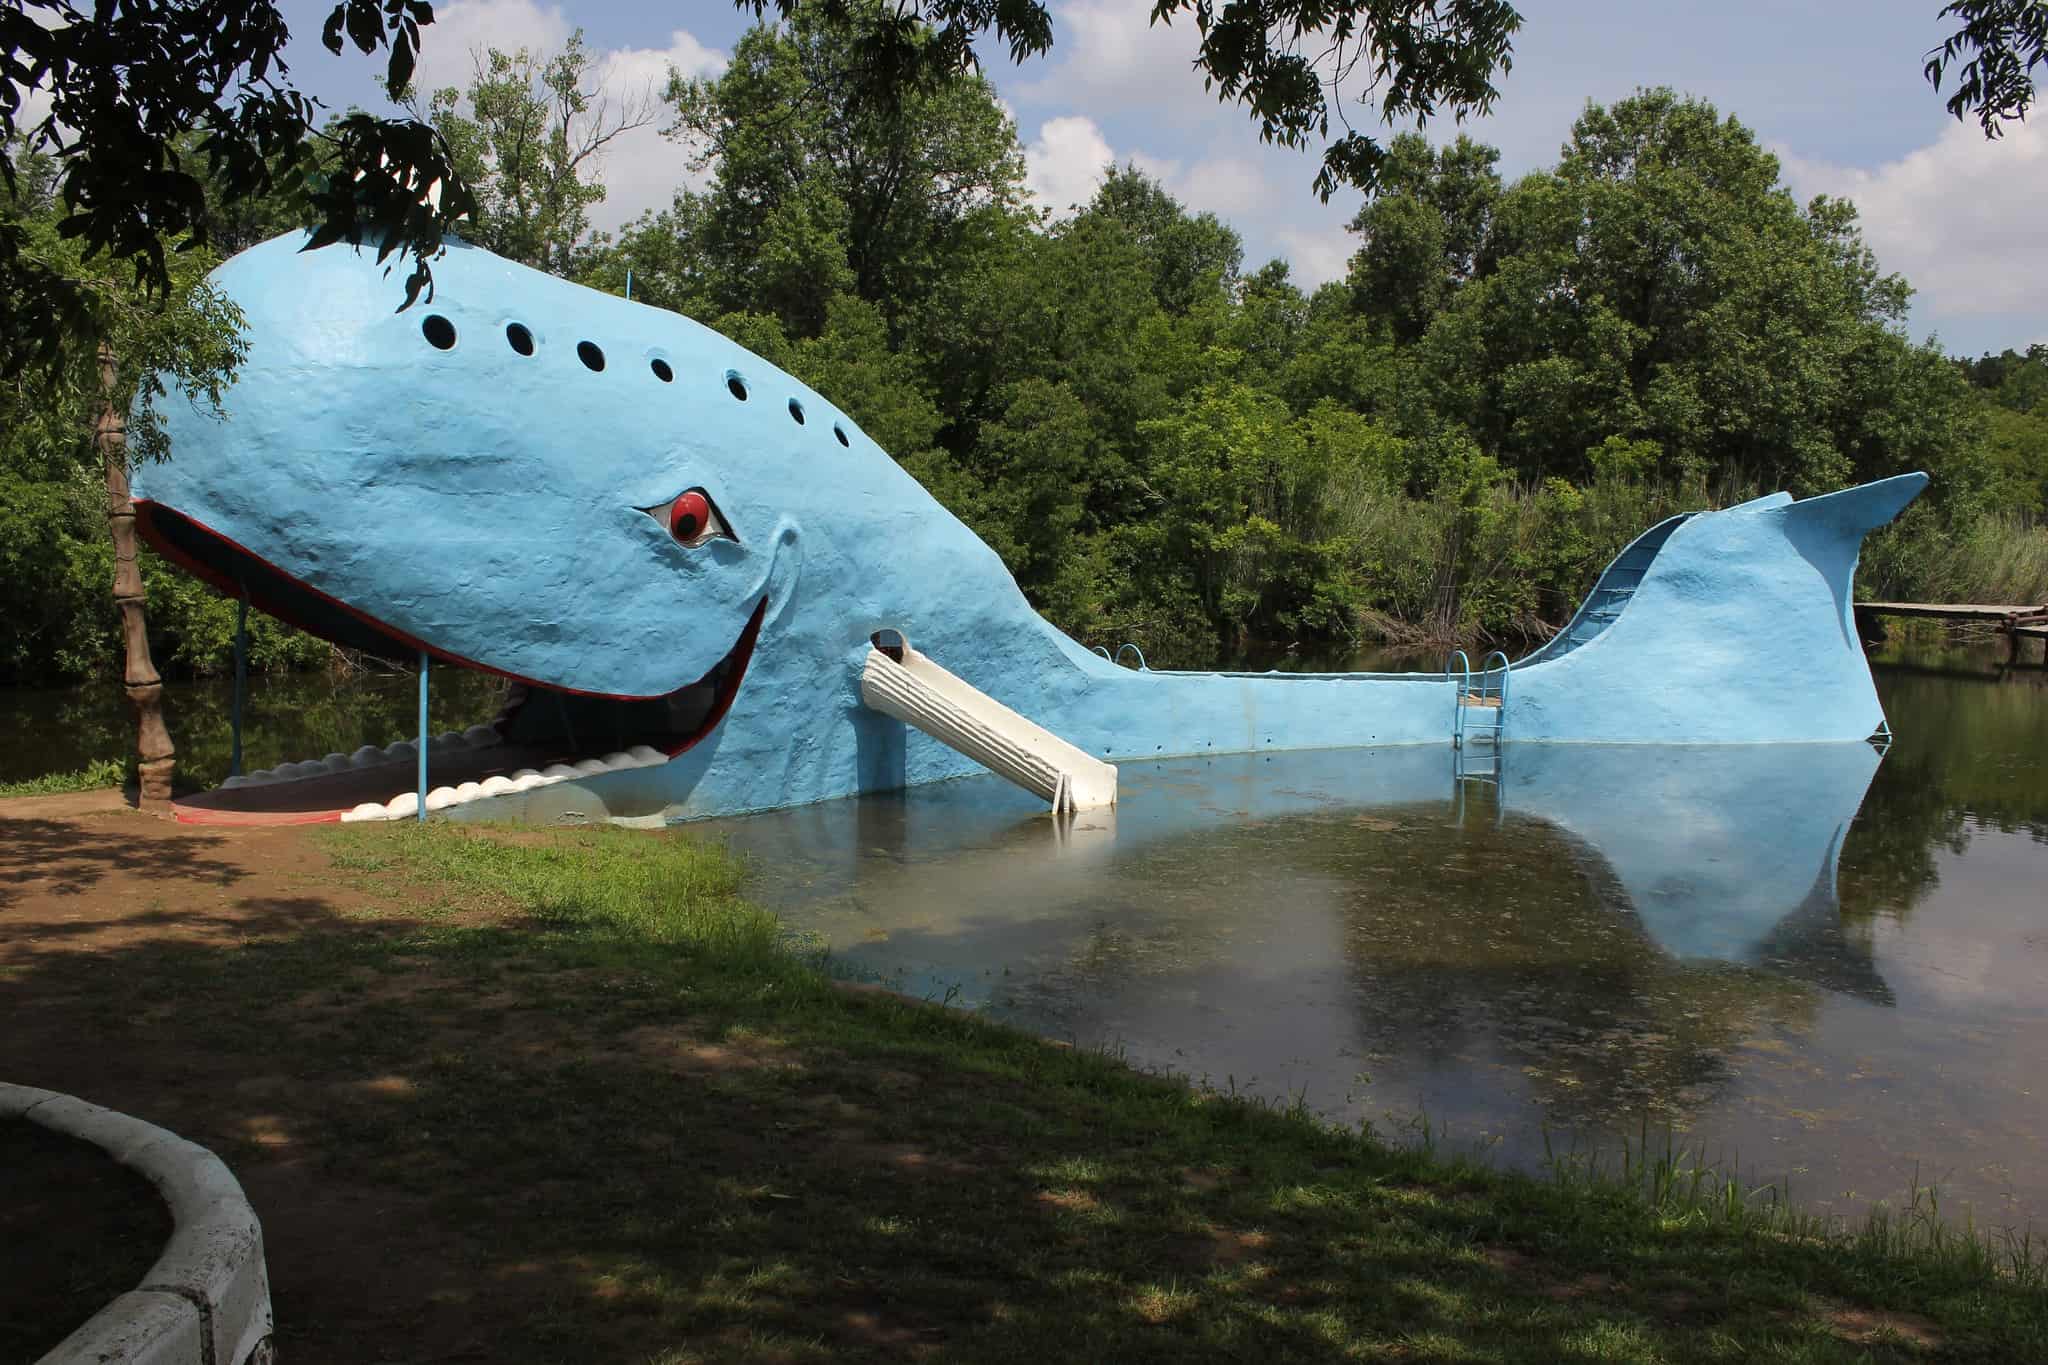 Blue Whale, Catoosa, Oklahoma by Nicolas Henderson